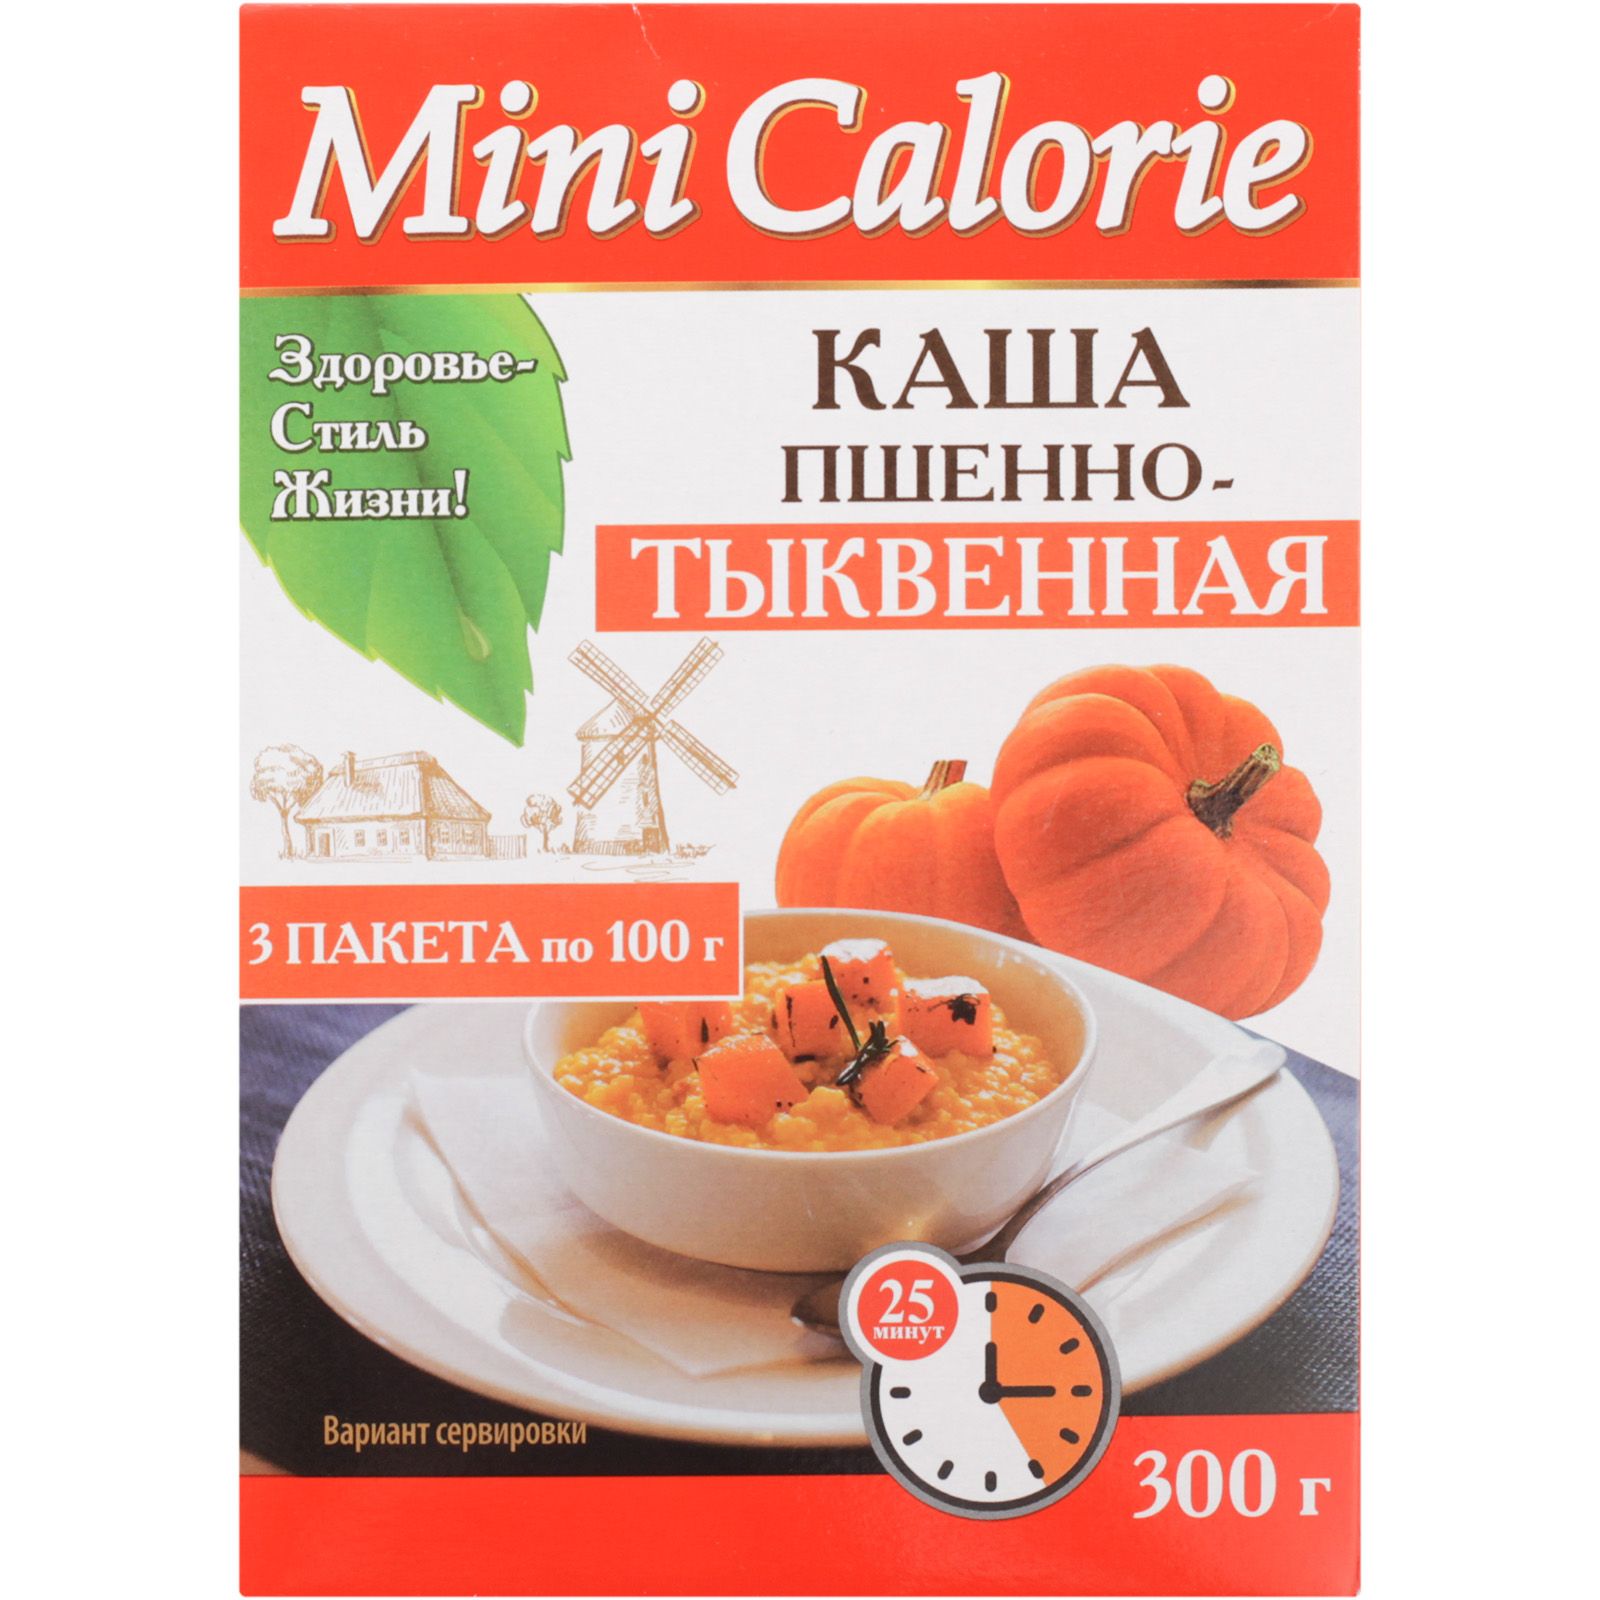 Каша пшенная Mini Calorie с тыквой 300 г